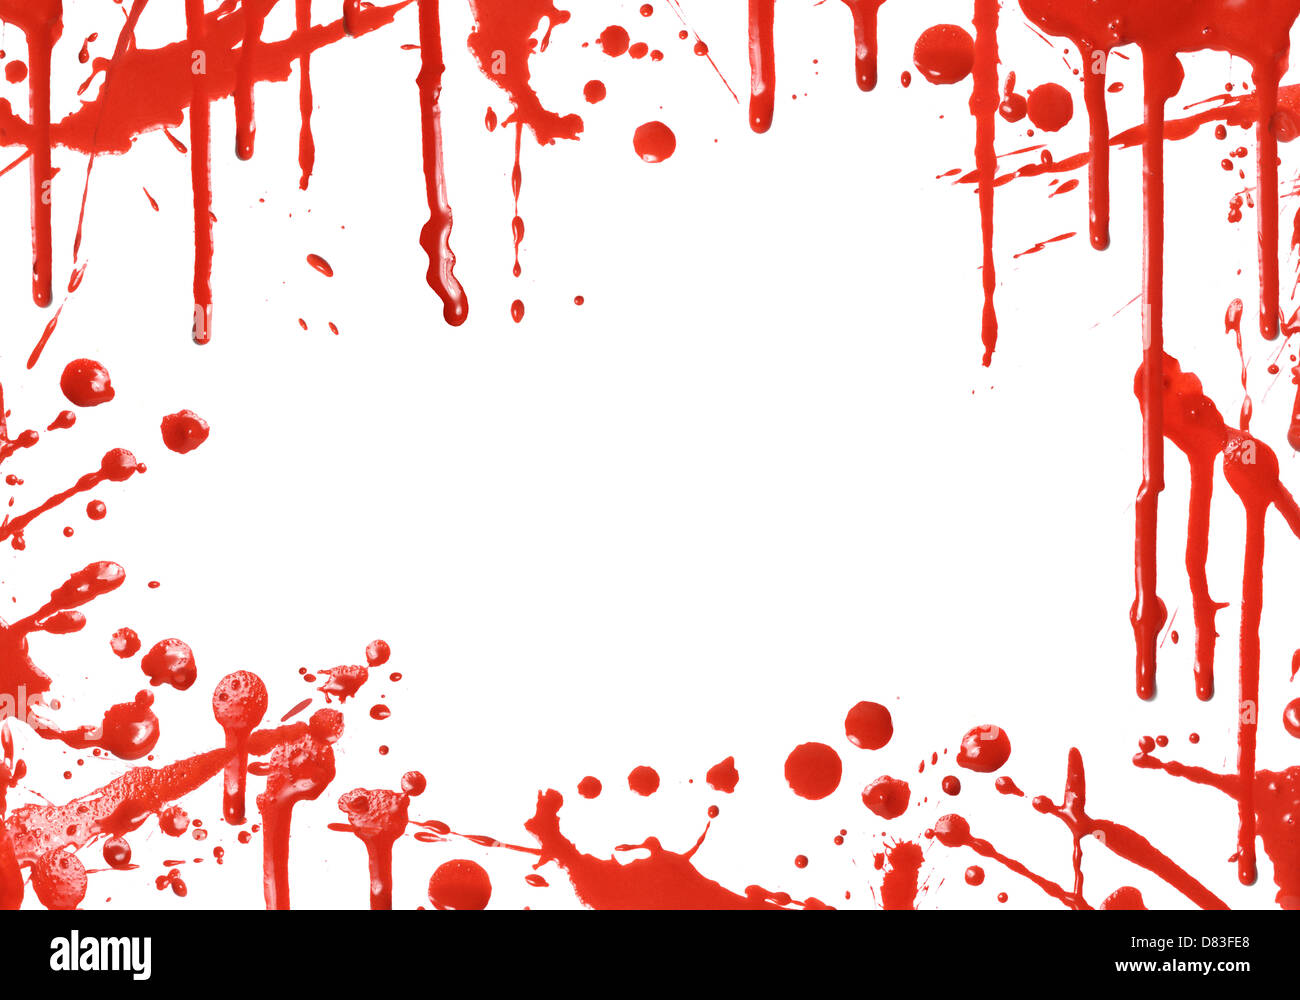 Trama de gotas de pintura roja sobre fondo blanco. Foto de stock